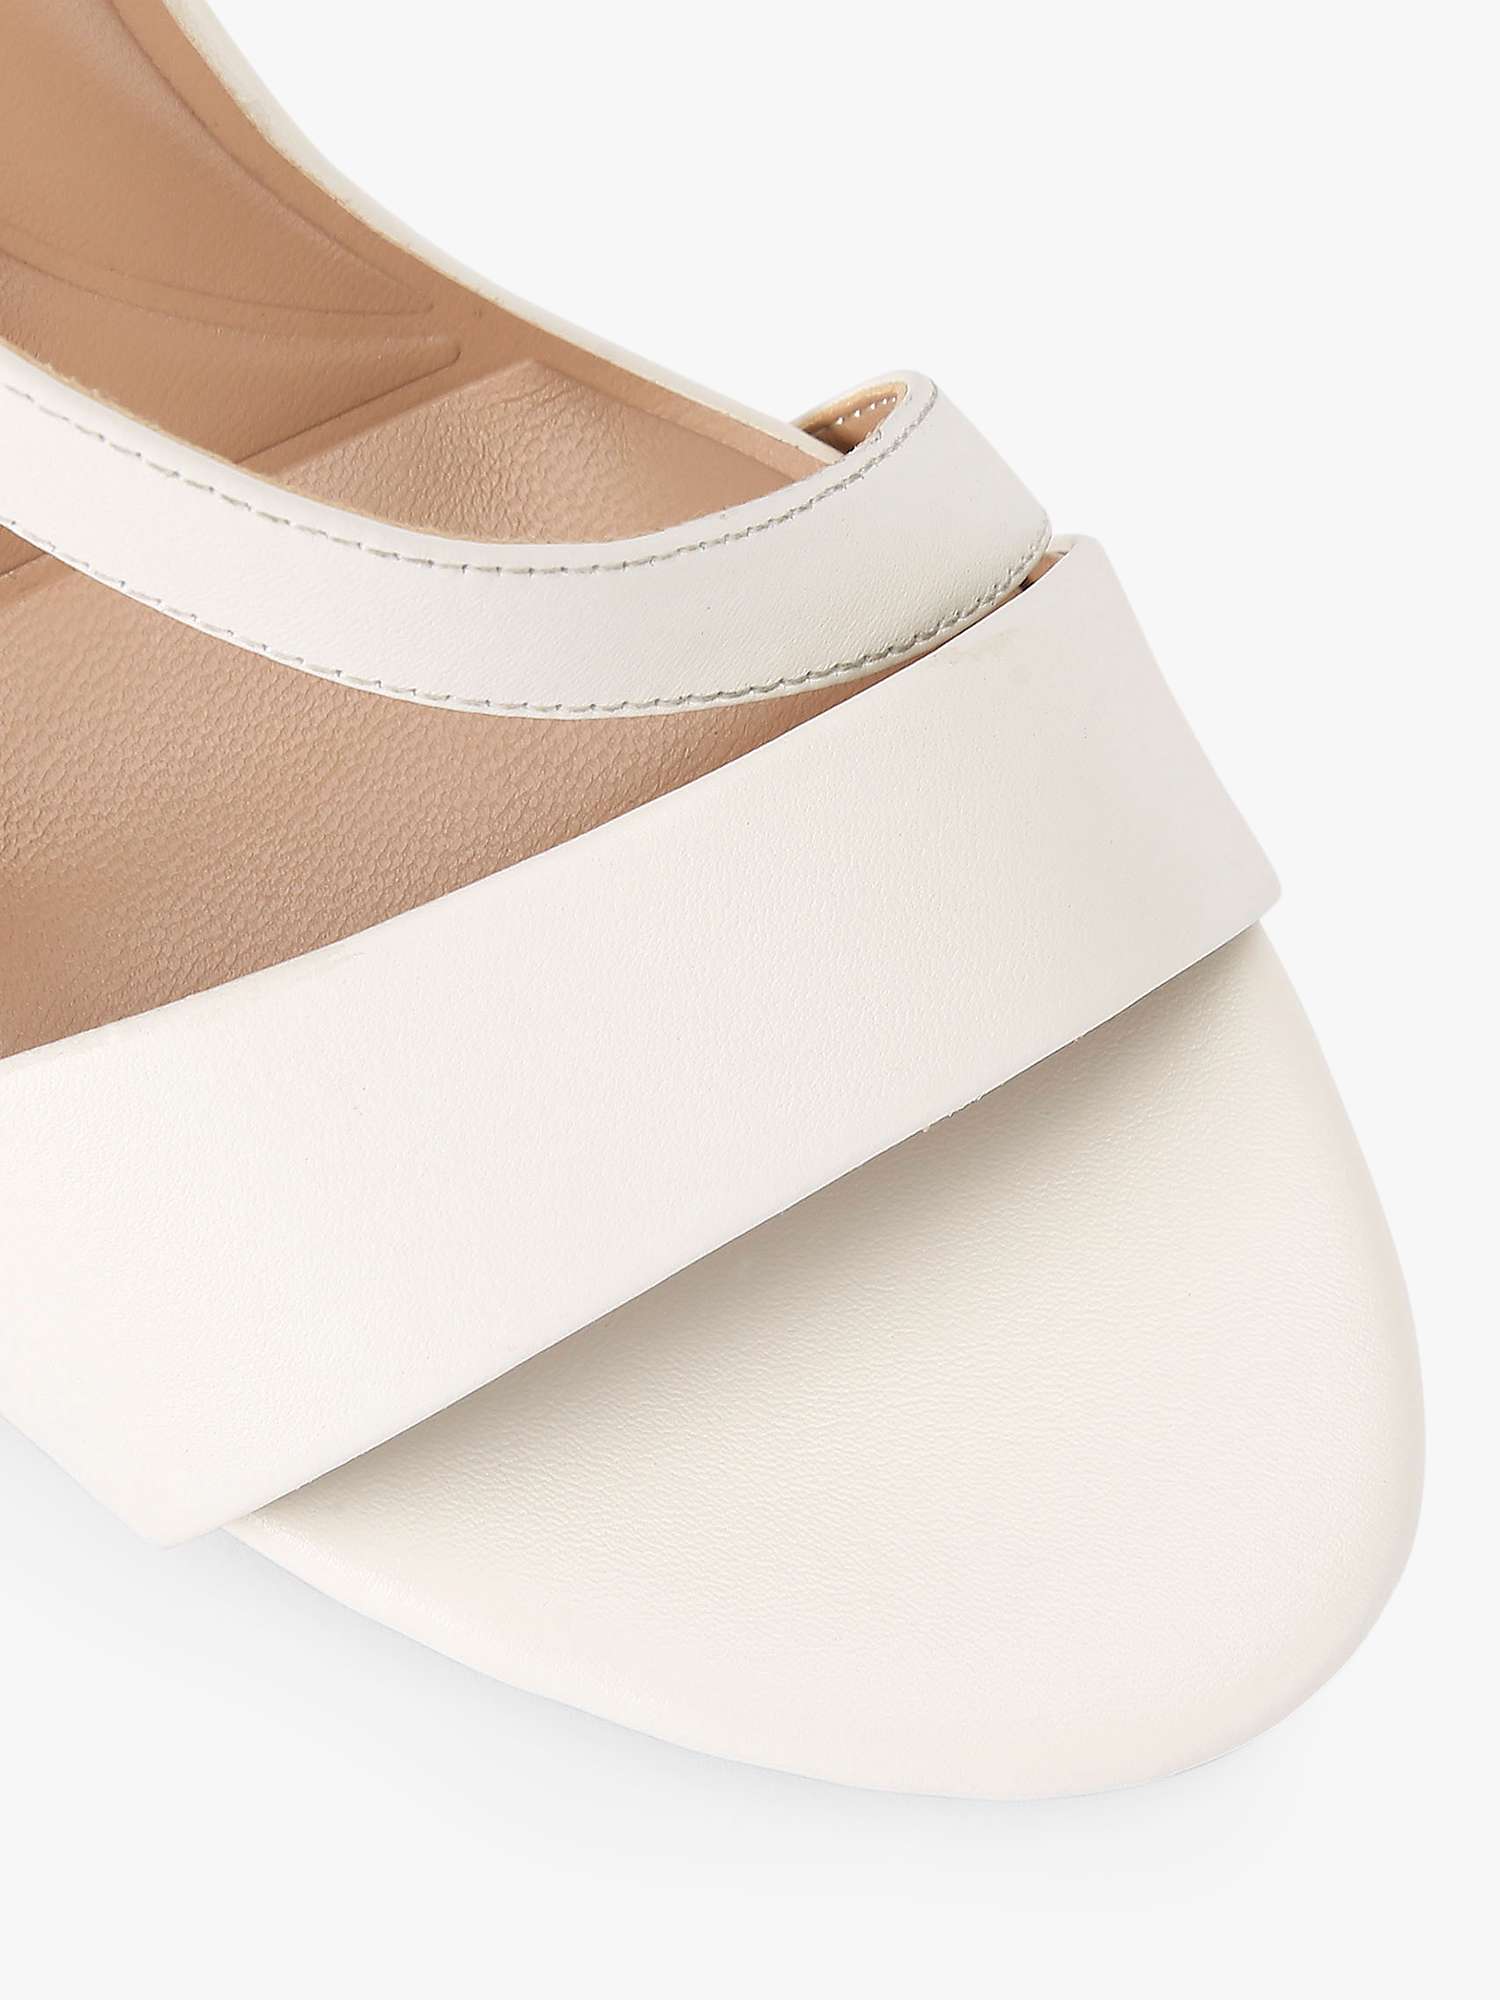 Buy Carvela Symmetry Leather Wedge Heel Sandals Online at johnlewis.com